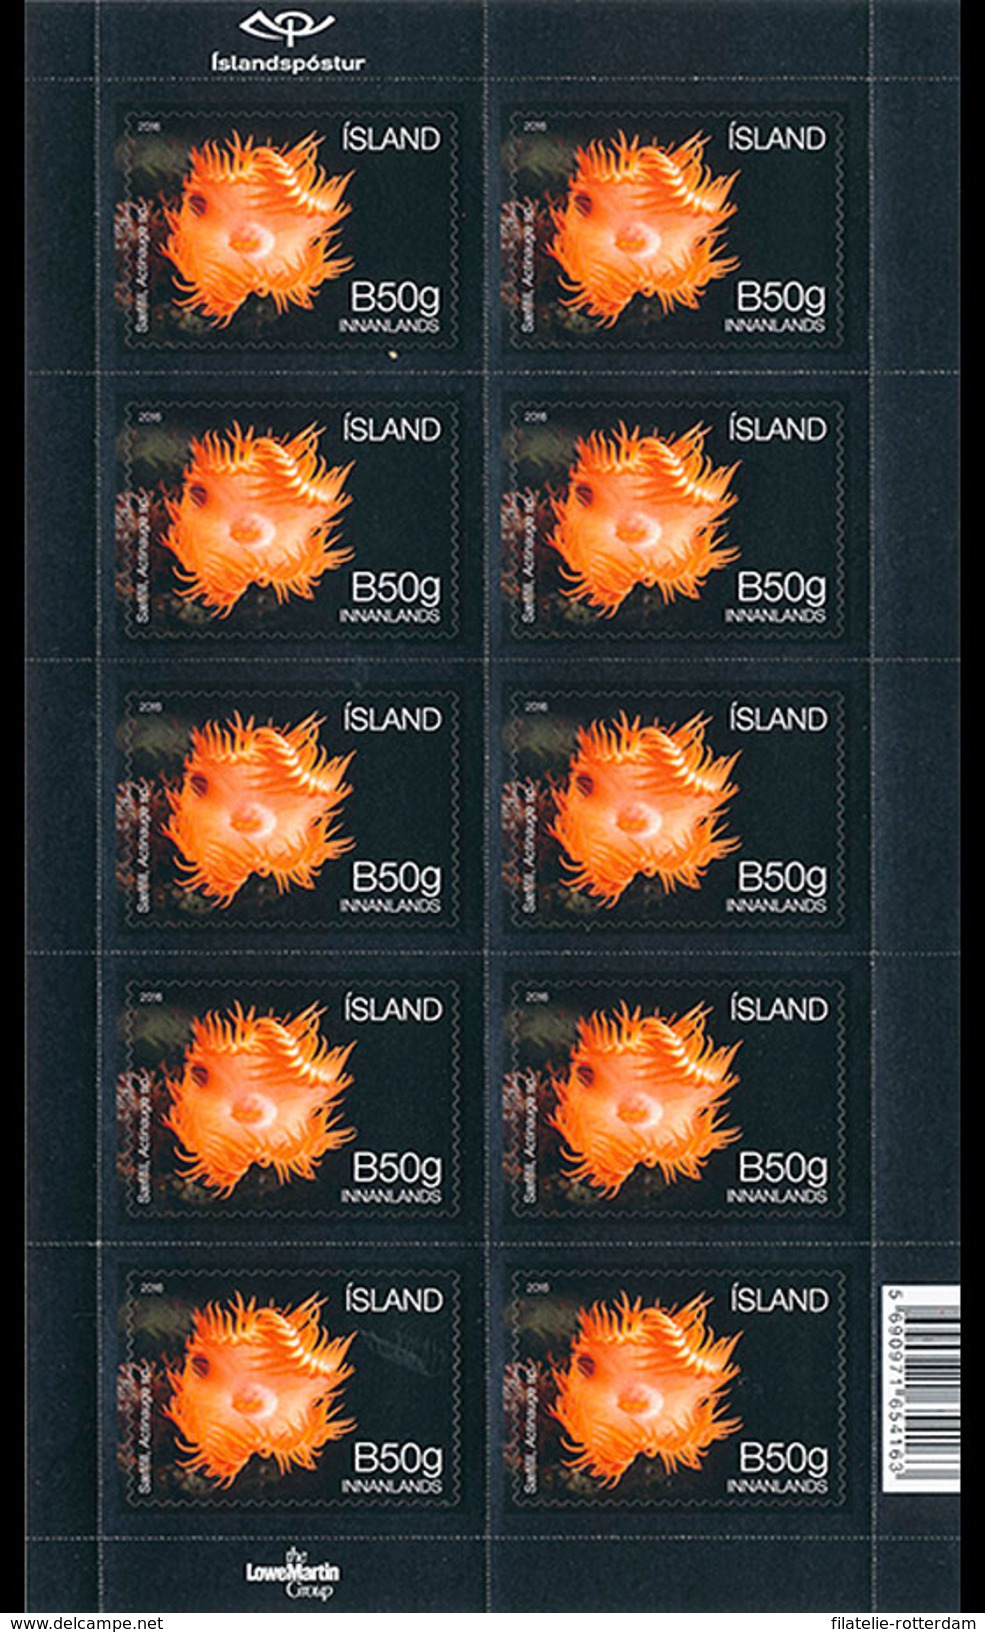 IJsland / Iceland - Postfris / MNH - Sheet Ecosysteem In IJsland (B50g) 2016 NEW!! - Unused Stamps